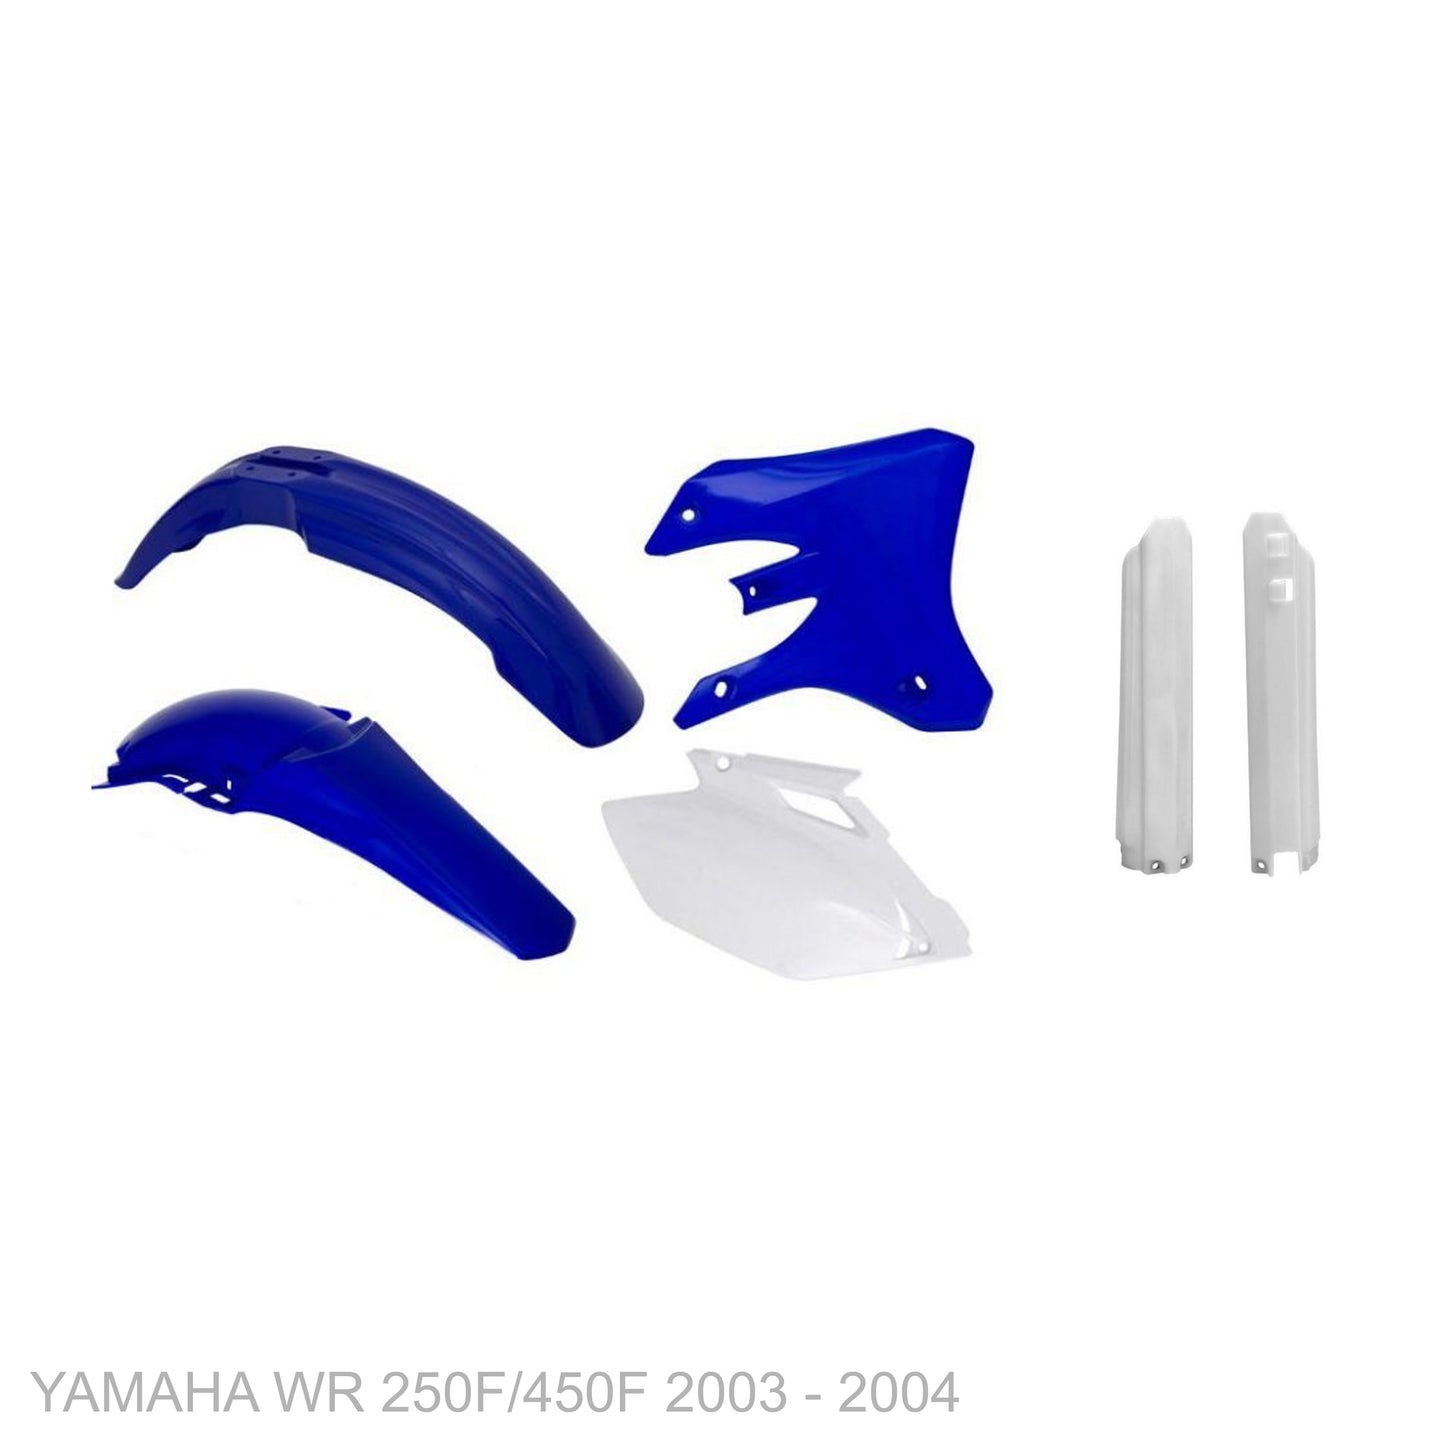 YAMAHA WR 250/450F 2003 - 2004 Start From Scratch Graphics Kits